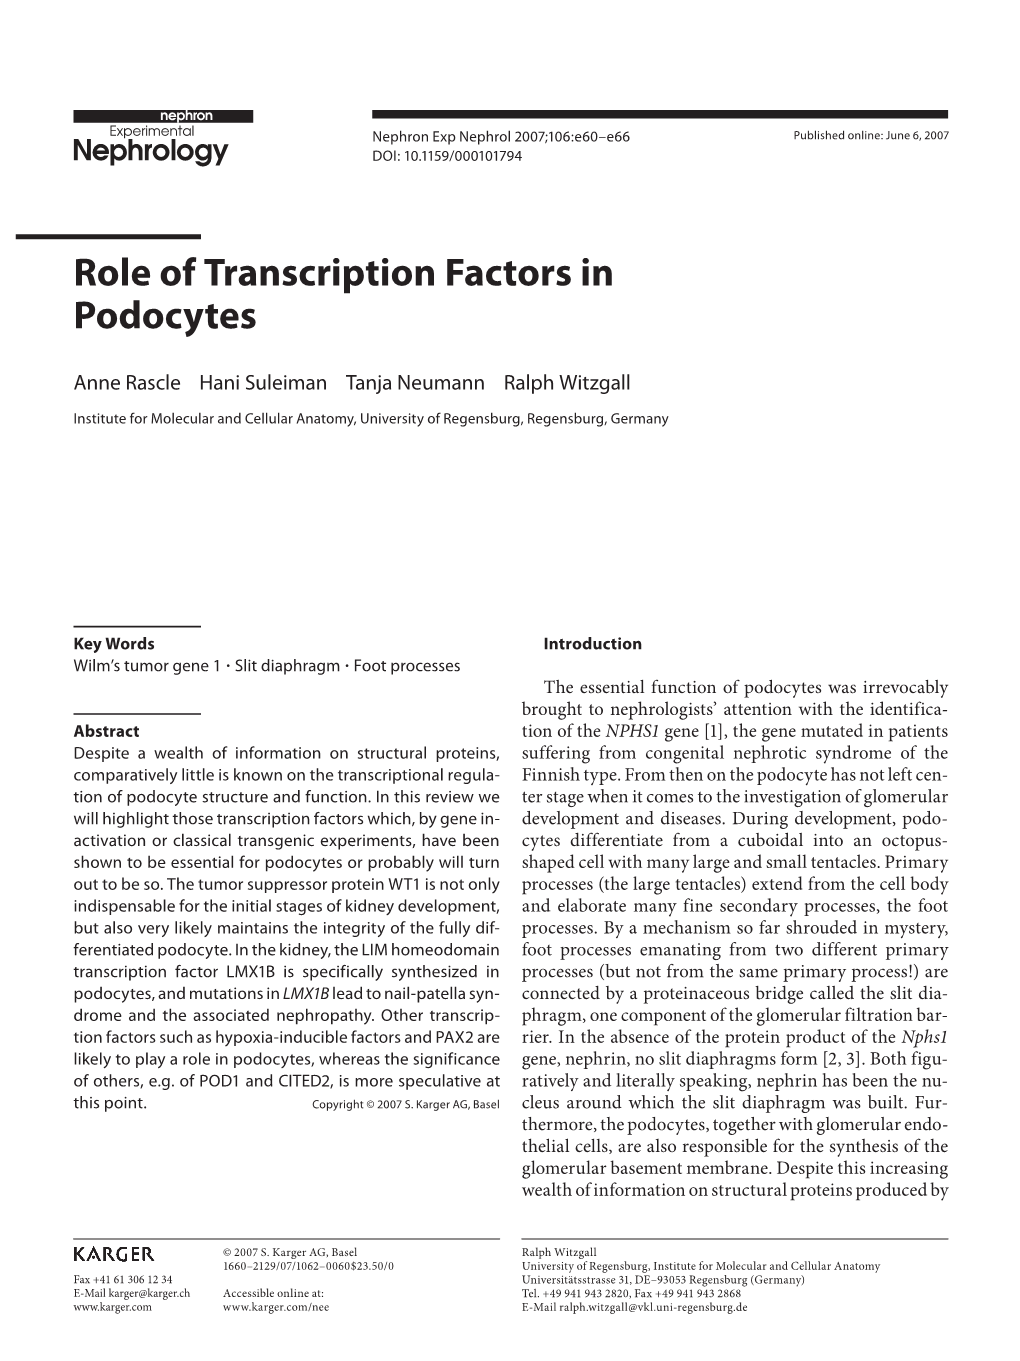 Role of Transcription Factors in Podocytes